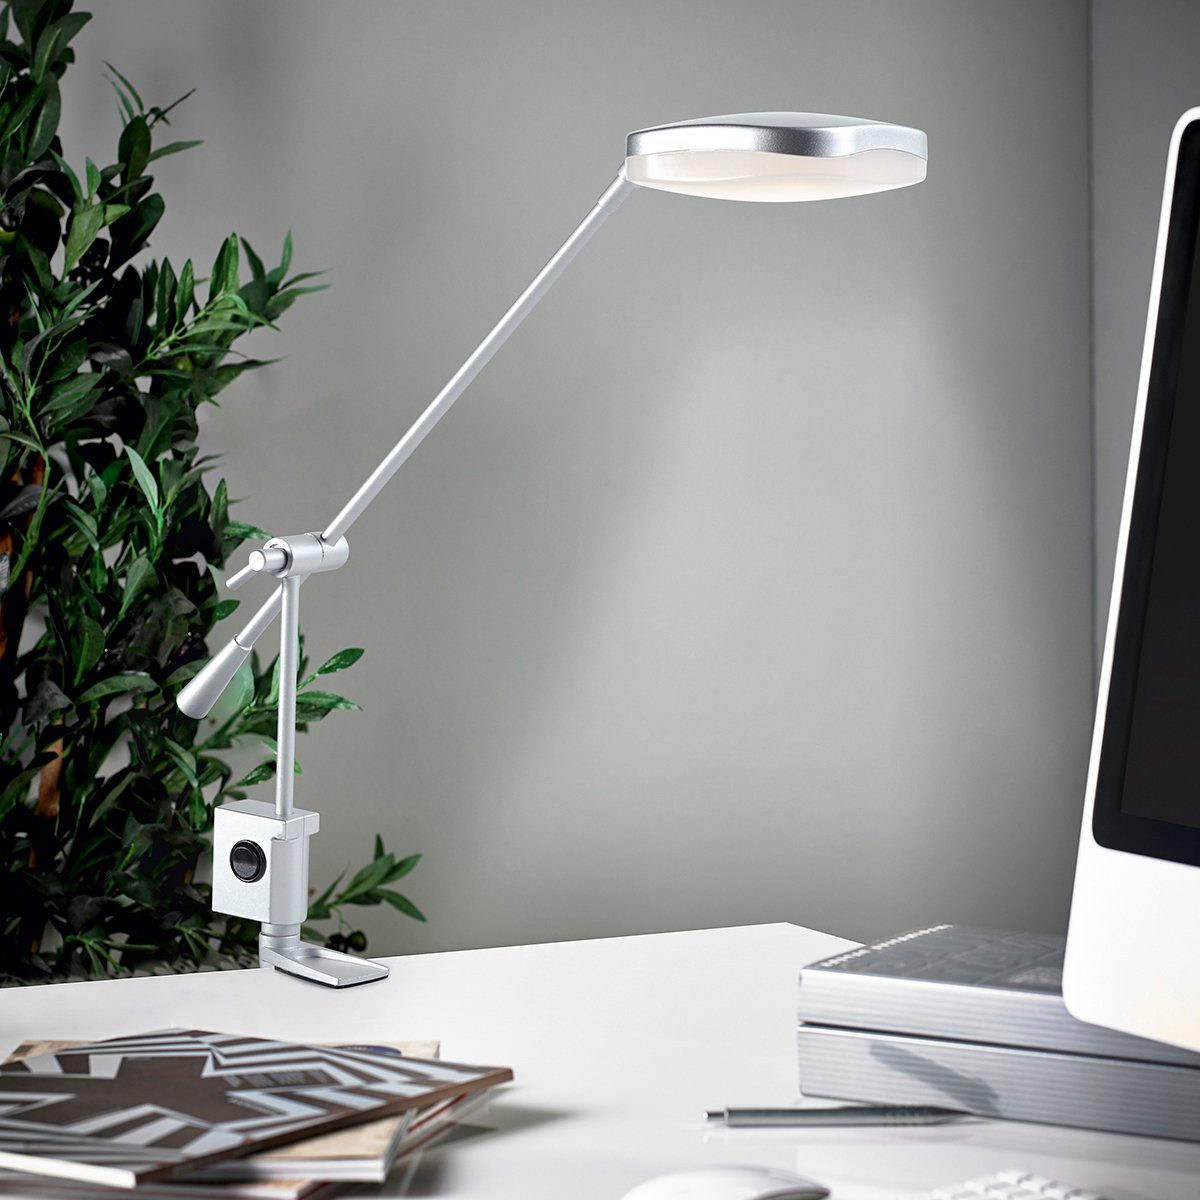 MeLiTec LED Schreibtischlampe T126, warmweiß, LED, Schreibtischleuchte, Leseleuchte, Büroleuchte, Nachttisch, chrom, Klemmfuß